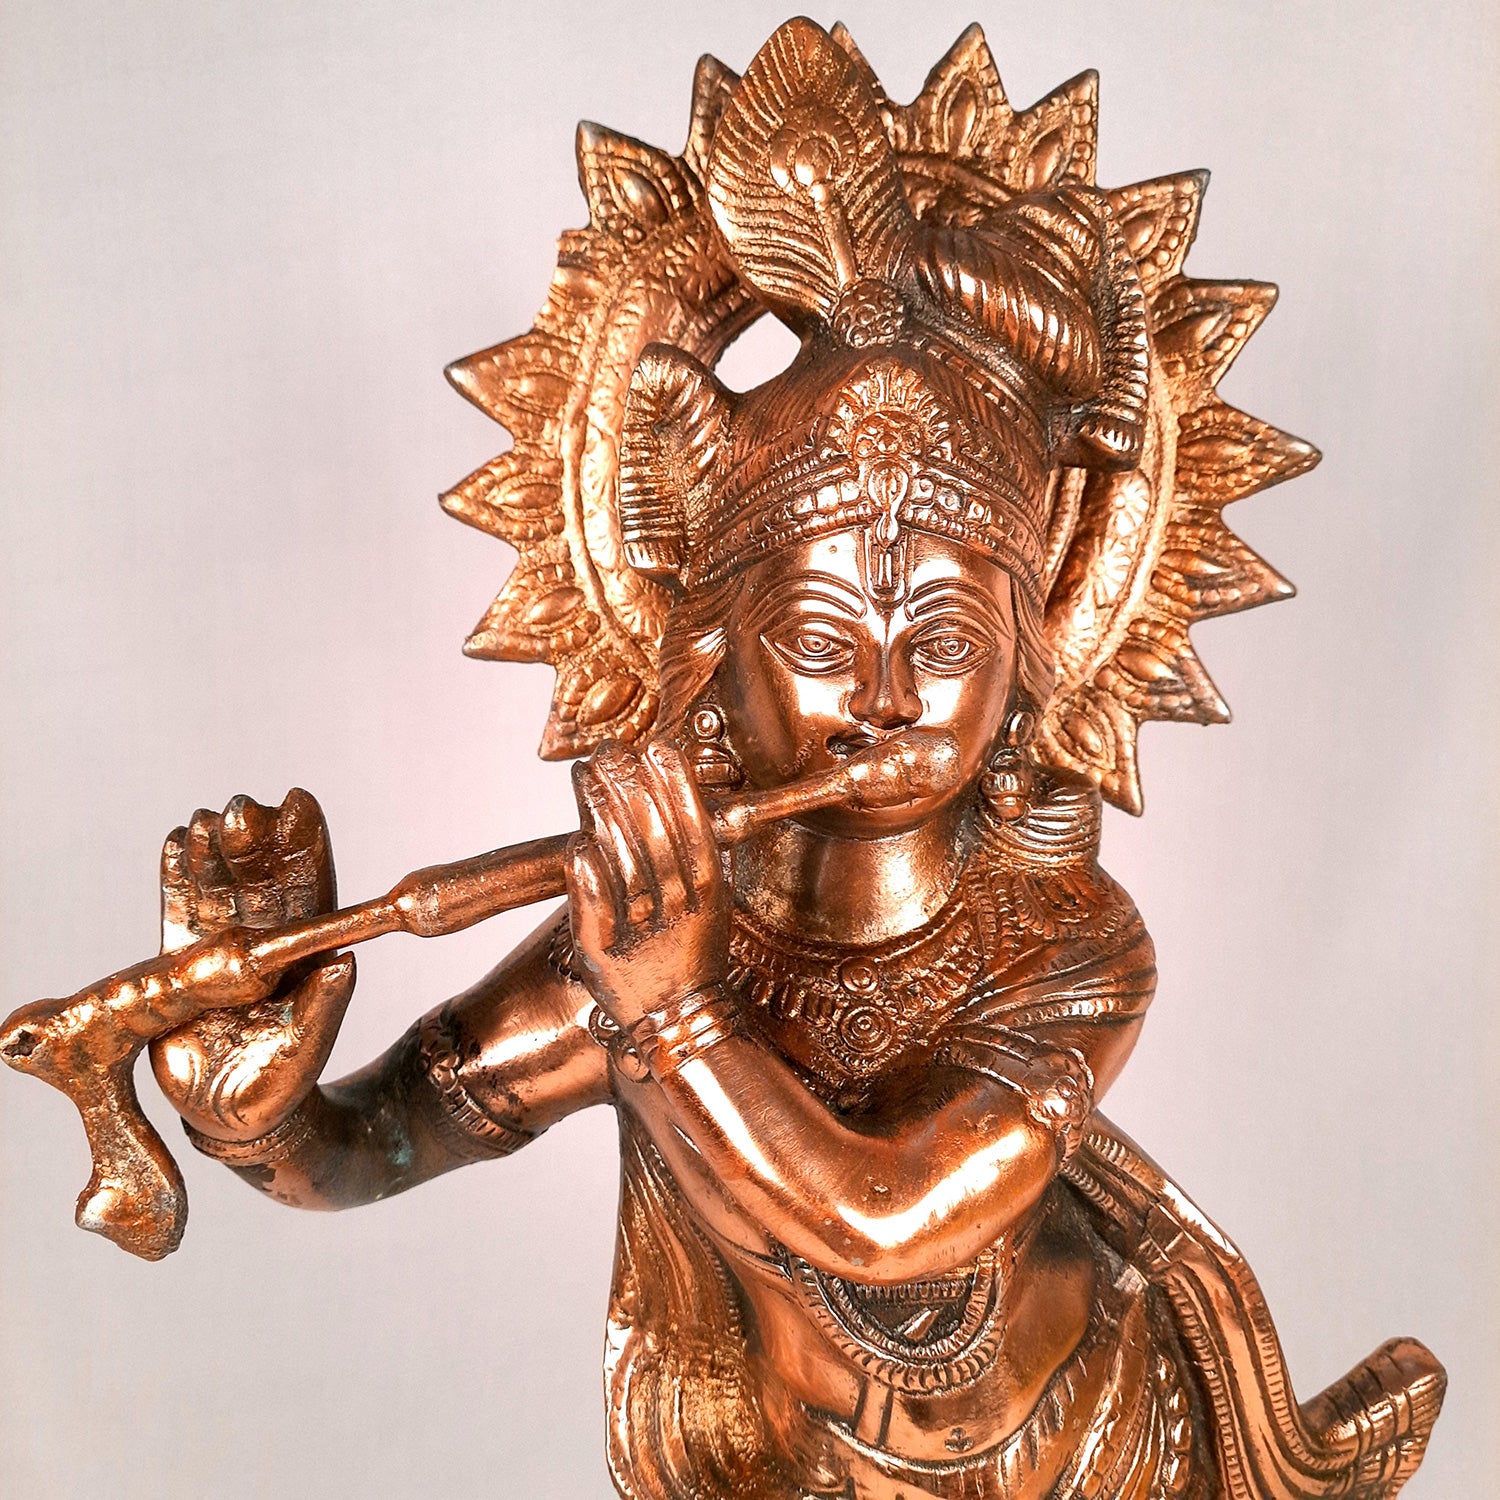 Shri Krishna Statue | Lord Krishna Idol Big | Religious & Spiritual Art Sculpture - for Gift, Home, Living Room, Office, Puja Room Decoration - 24 inch - Apkamart